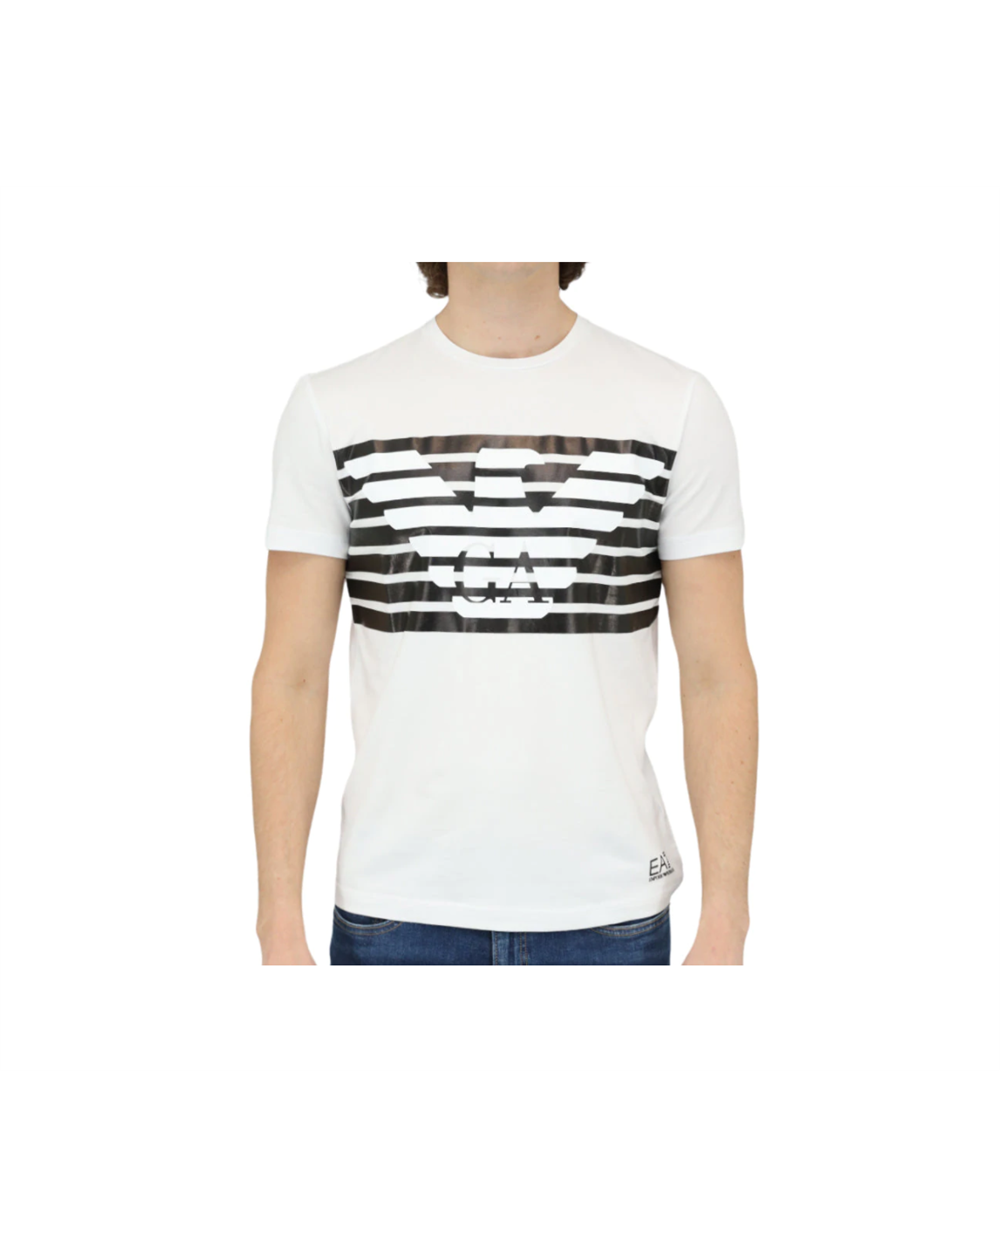 EA7 t-shirt uomo ARMANI bianca 100% cotone con logo aquila